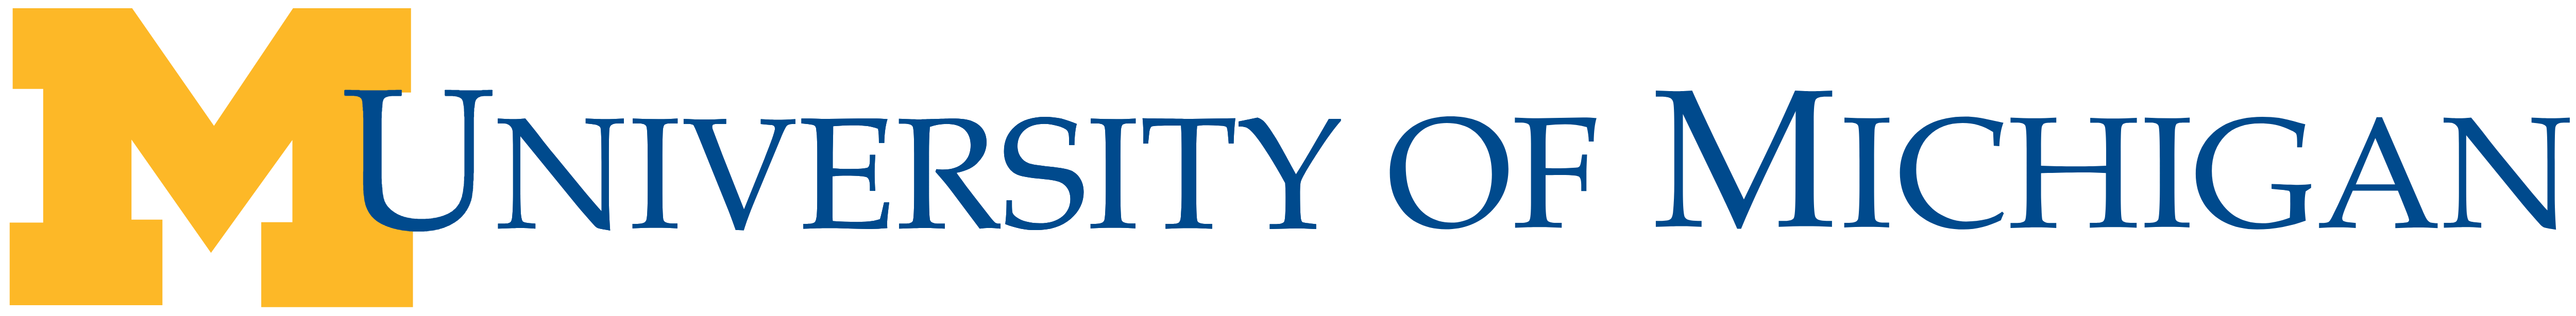 University of MI Logo - Admission Details for University of Michigan | ReachIvy